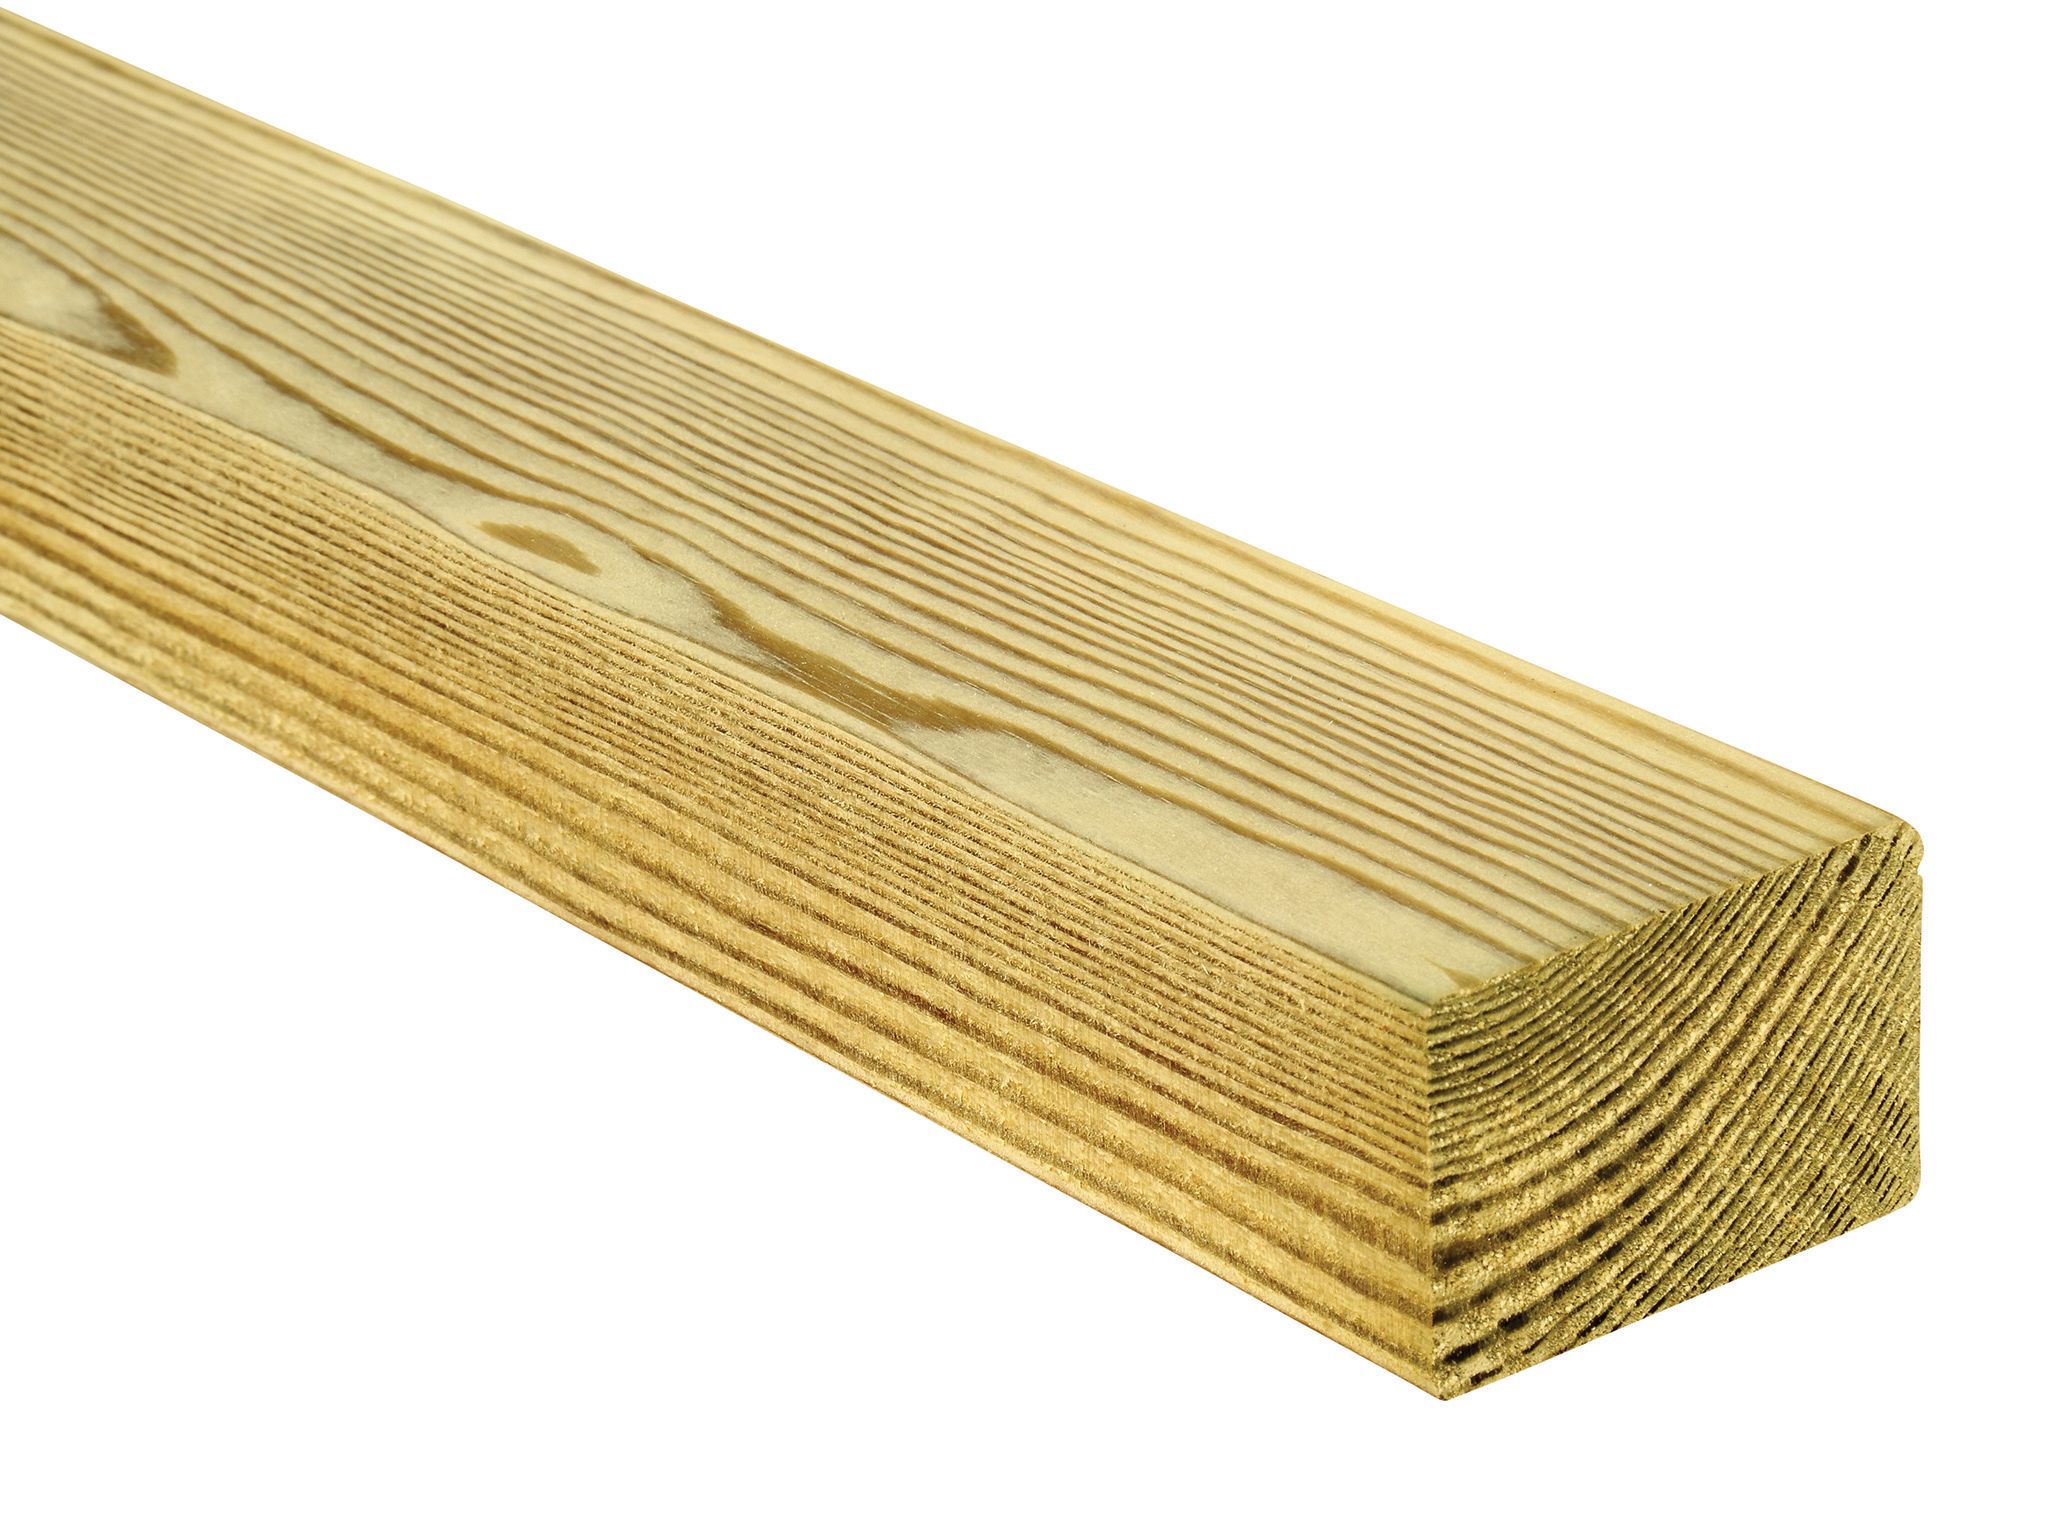 Image of Wickes Kiln Dried Treated C16 Timber - 45x70x3000mm